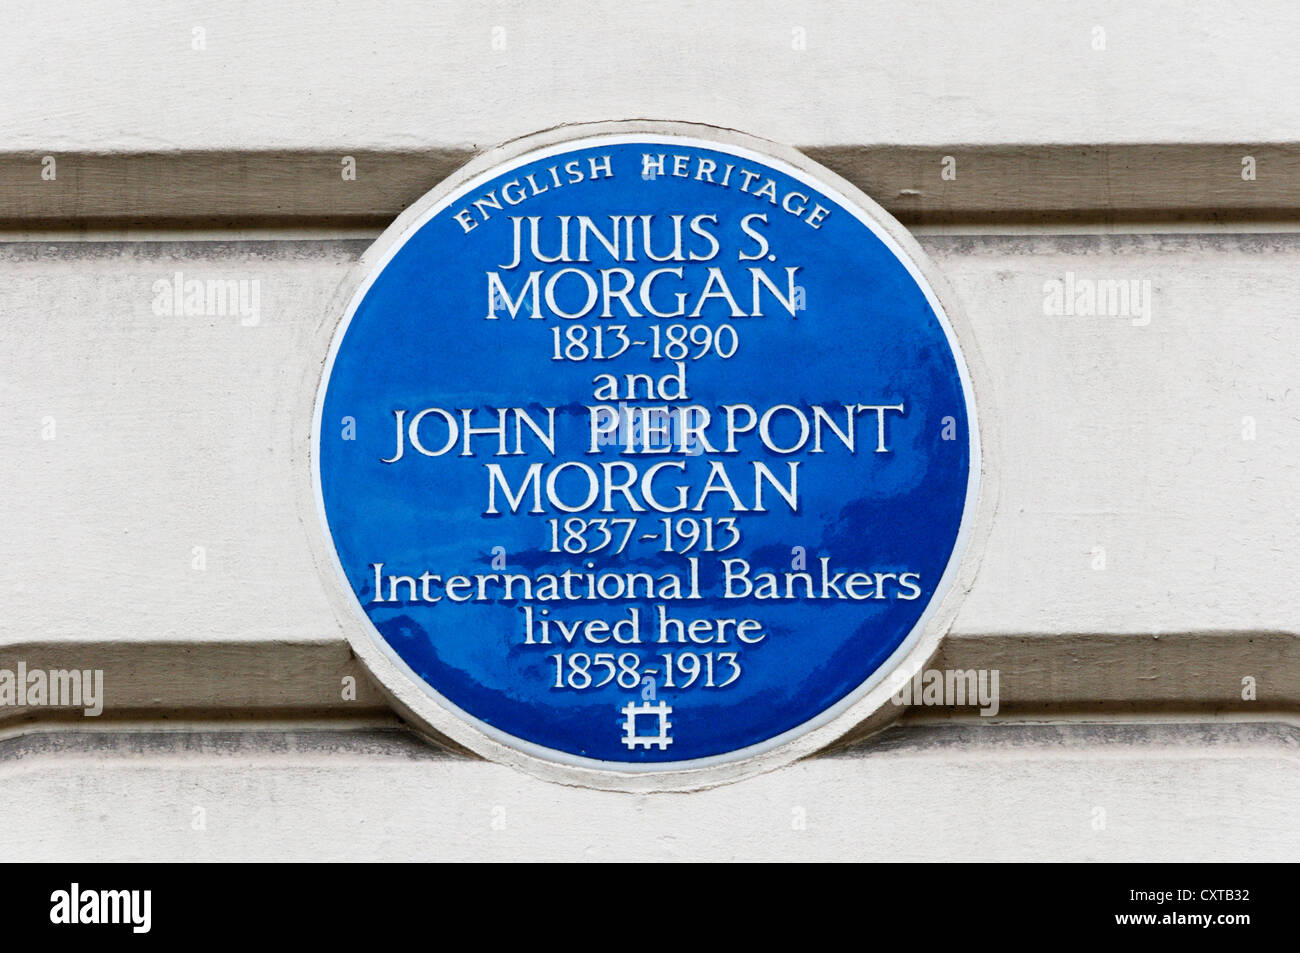 Targa blu su locali occupati da Junius S. Morgan e John Pierpont Morgan in Princes Gate, Westminster, London. Foto Stock